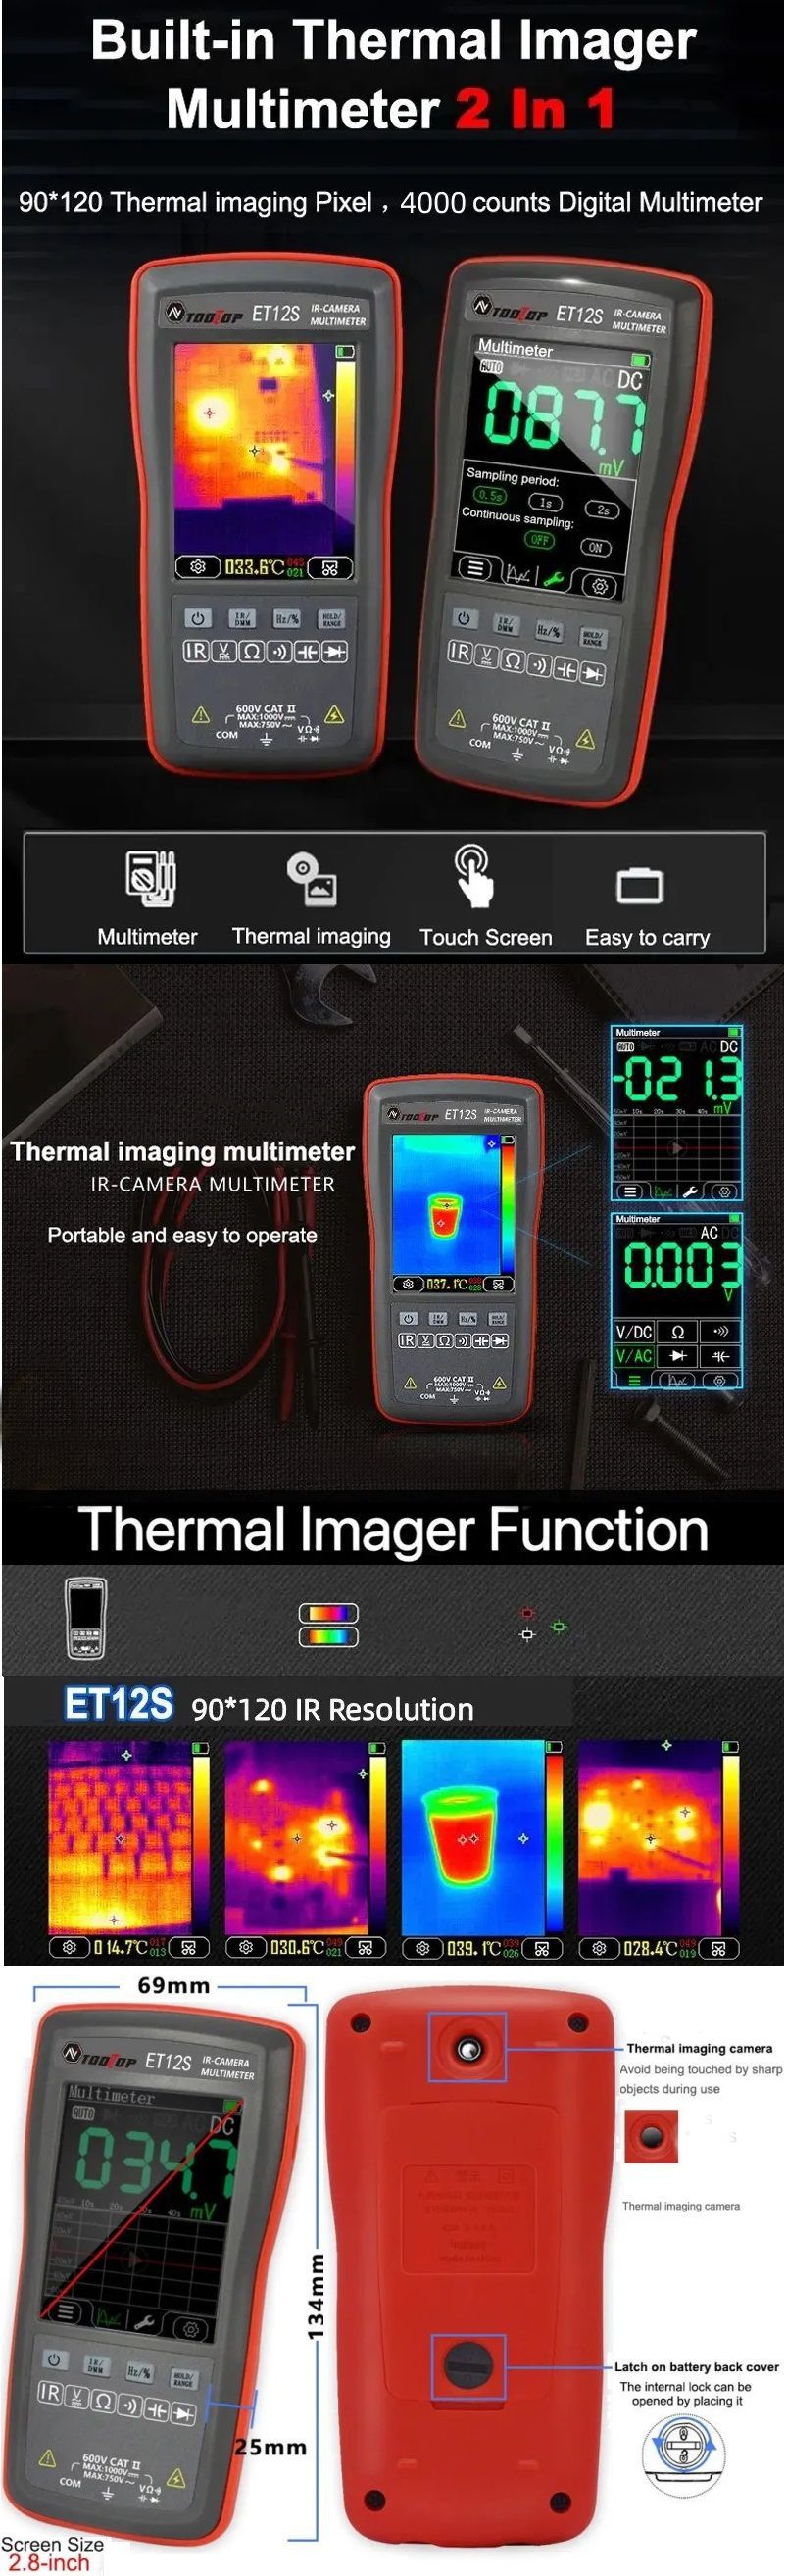 Multimetro Camara termografica 2 EN 1